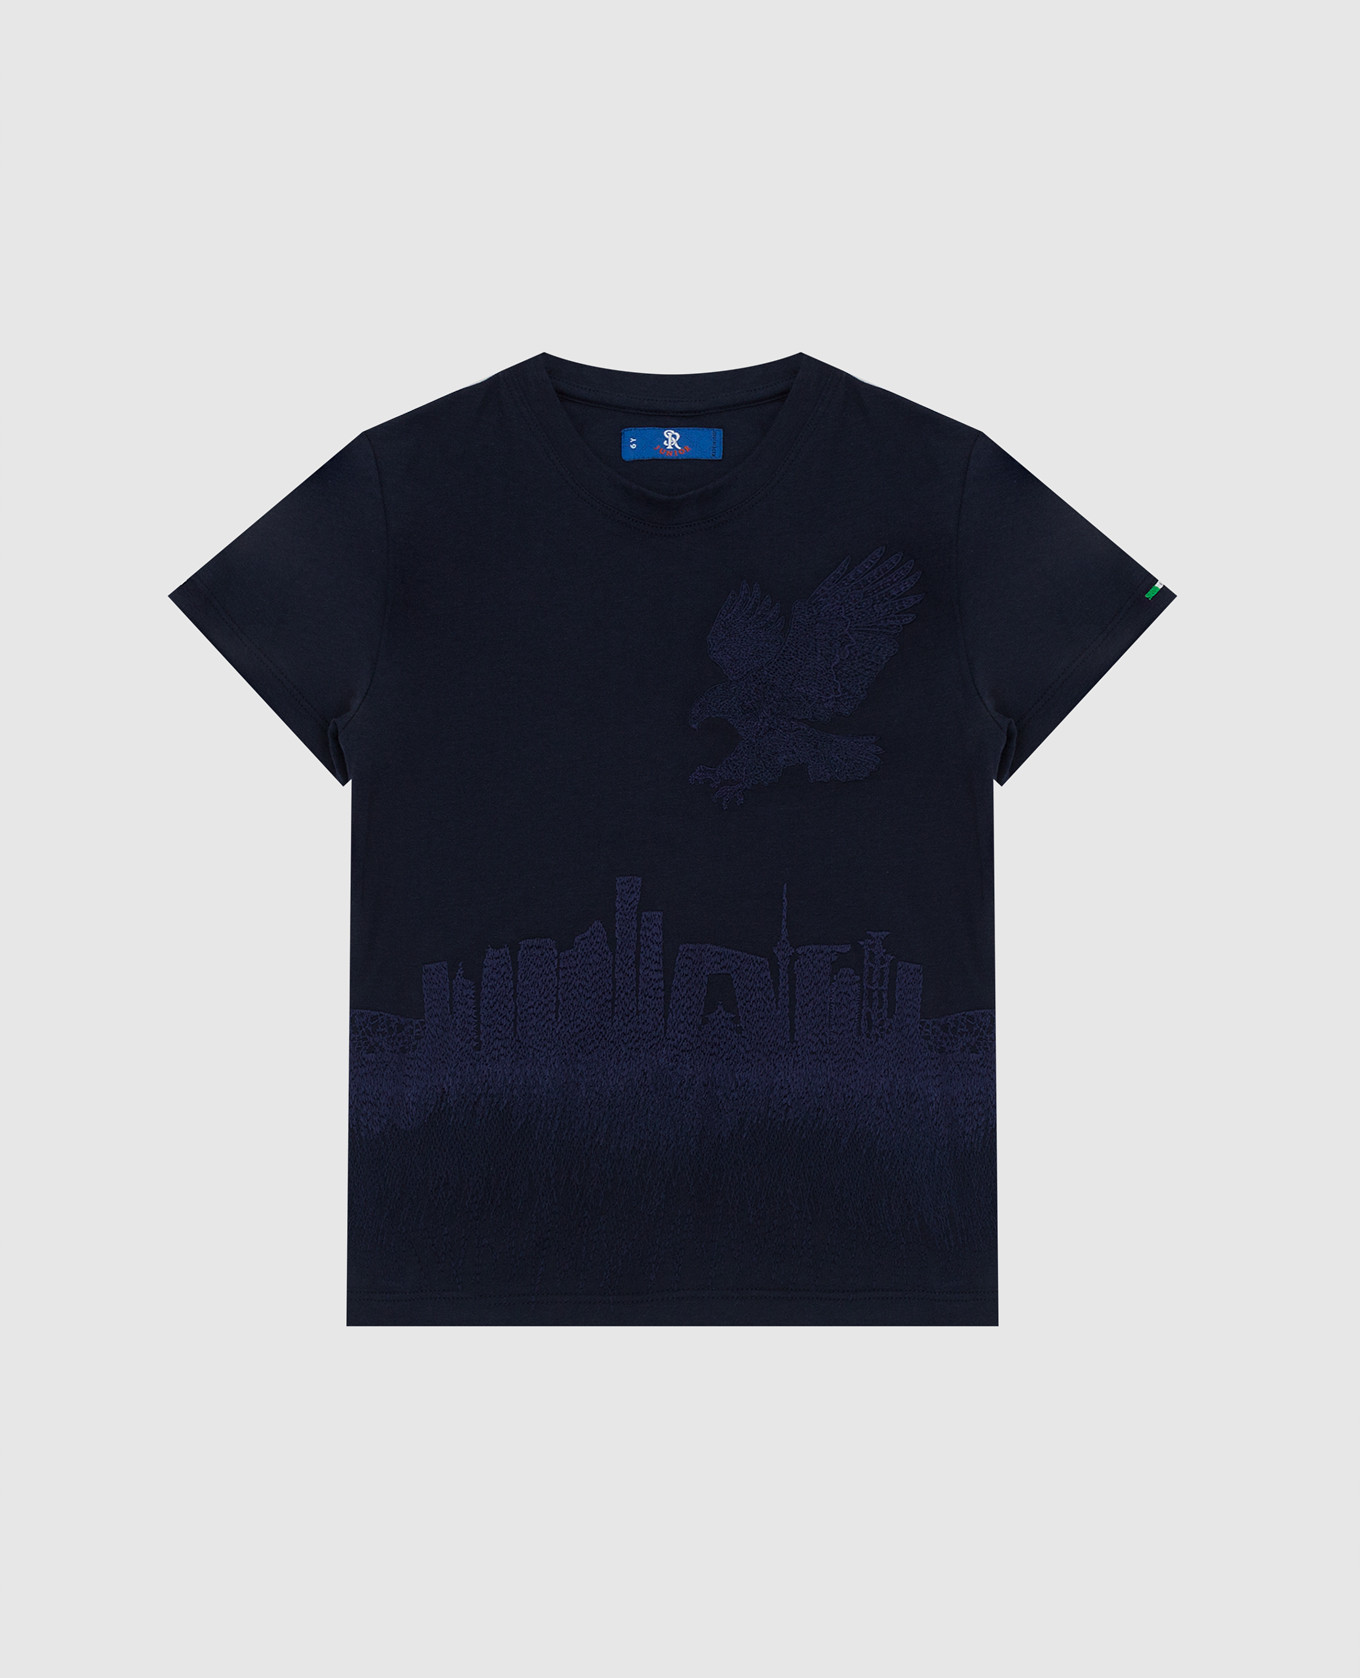 Children's dark blue t-shirt with embroidery